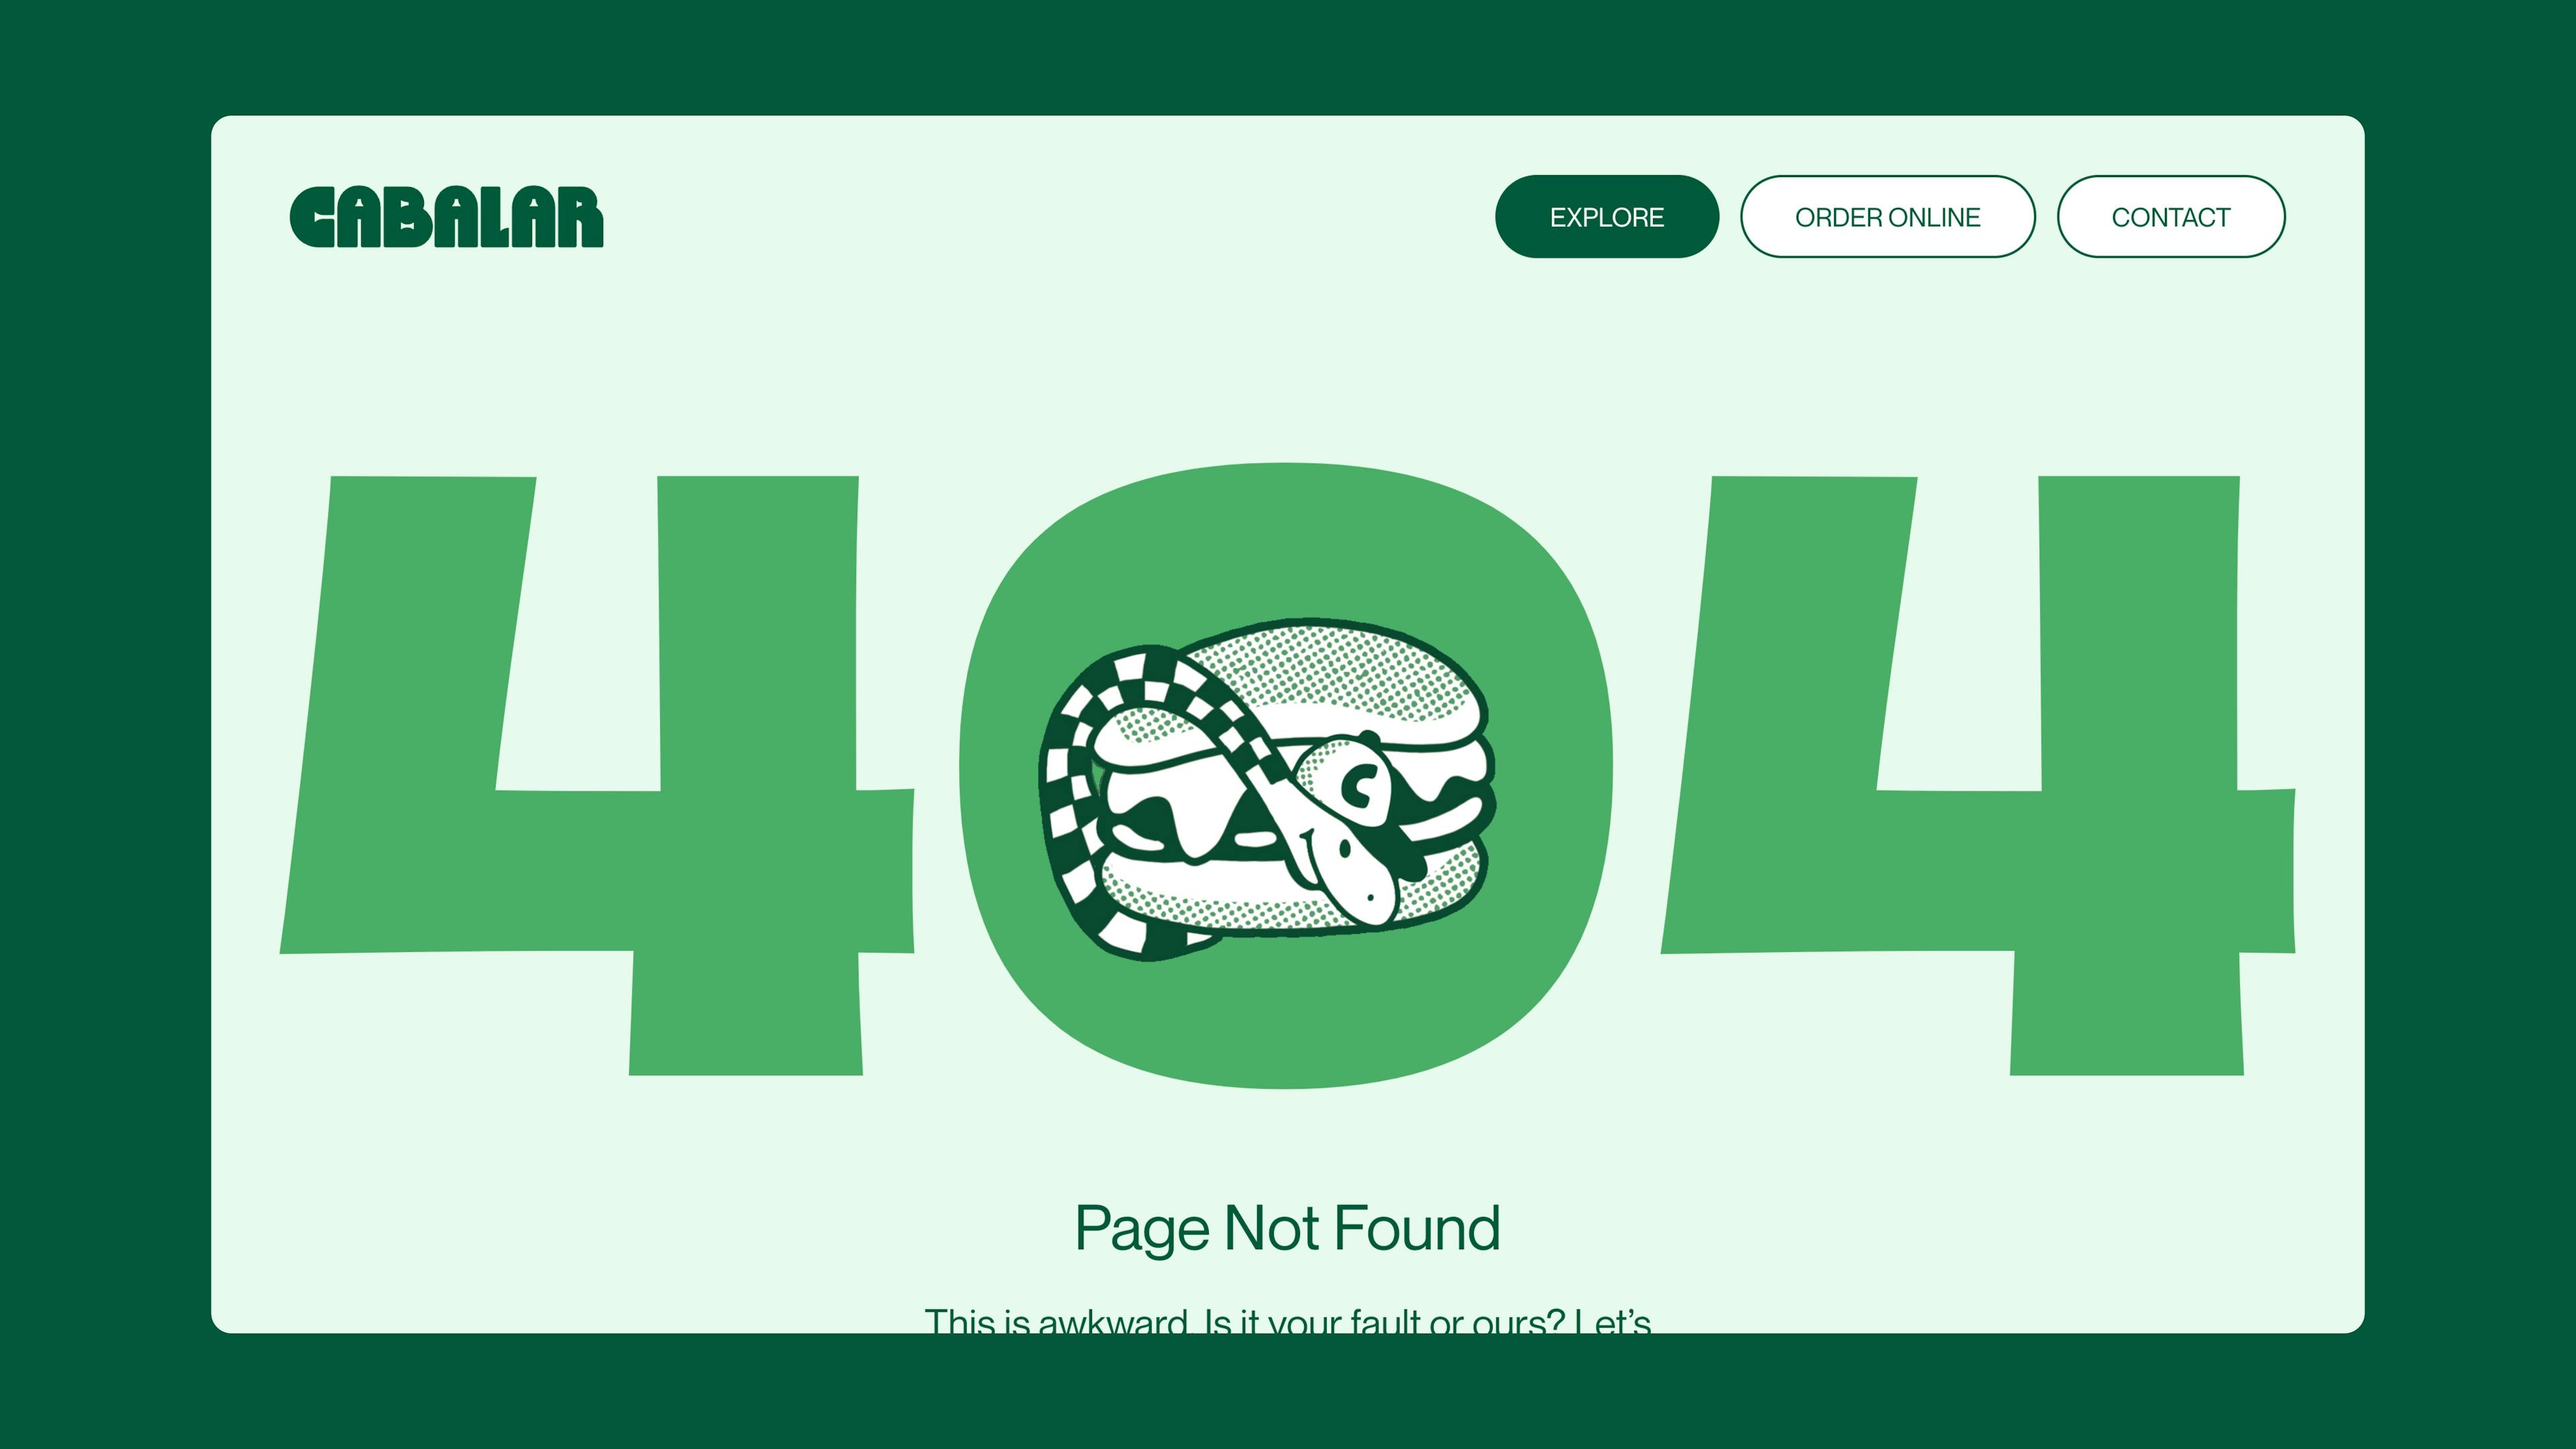 Cabalar 404 error page with snake animation